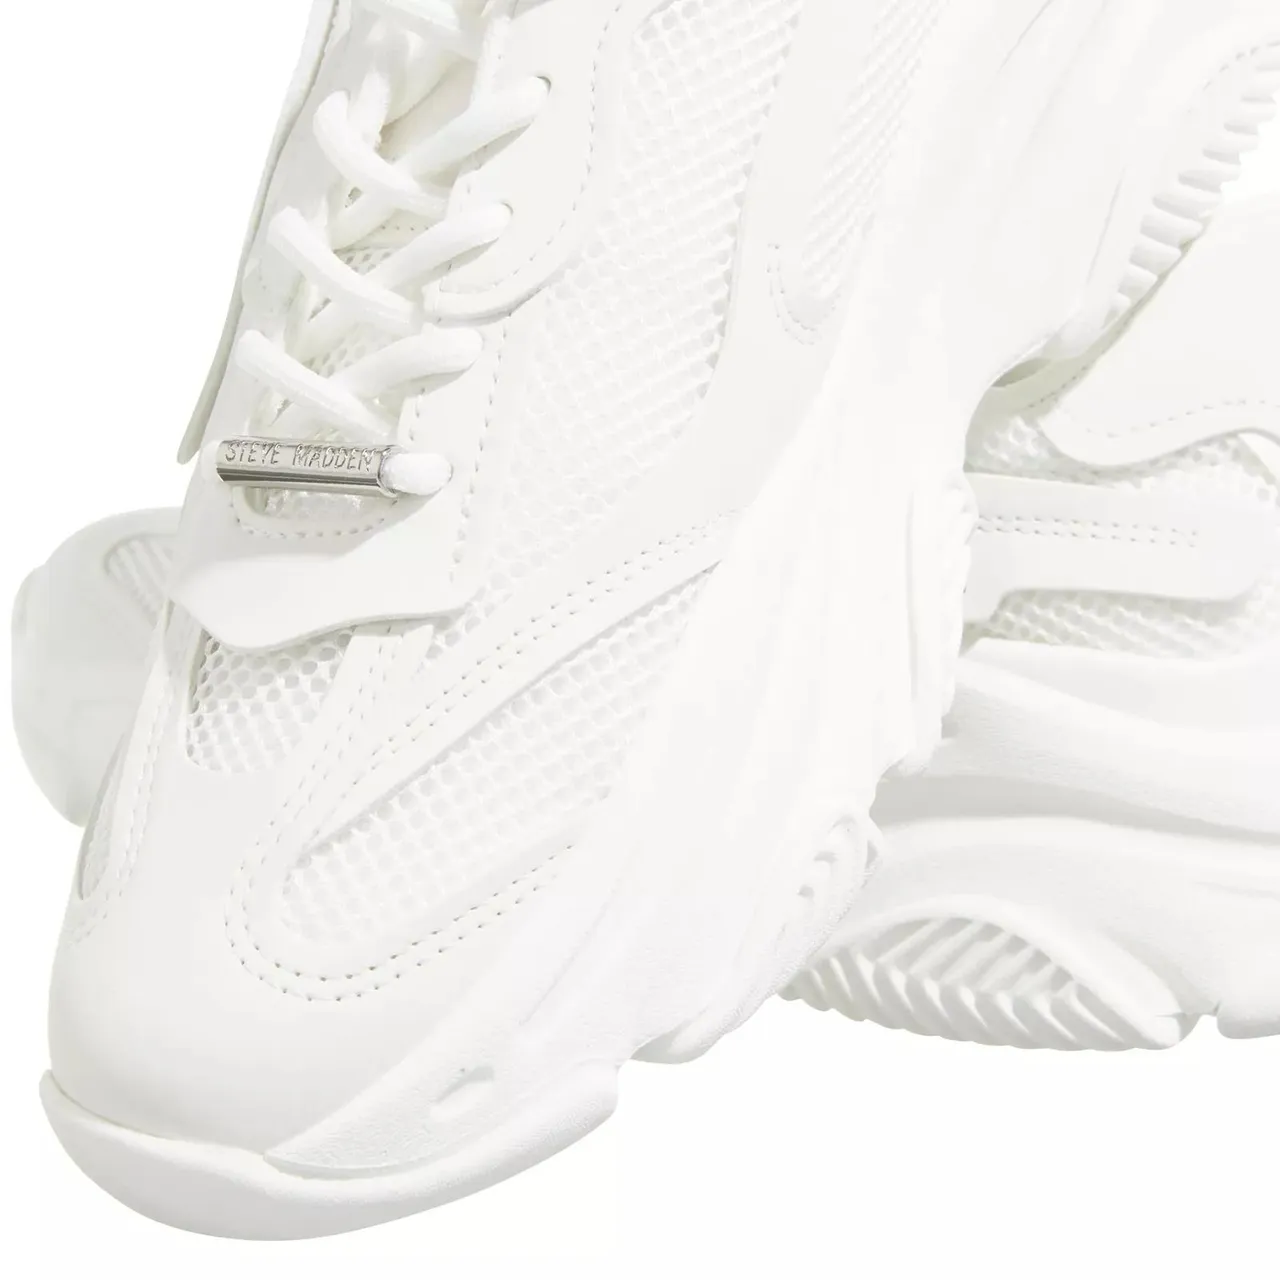 Steve Madden Sneakers - Possession-E - white - Sneakers for ladies